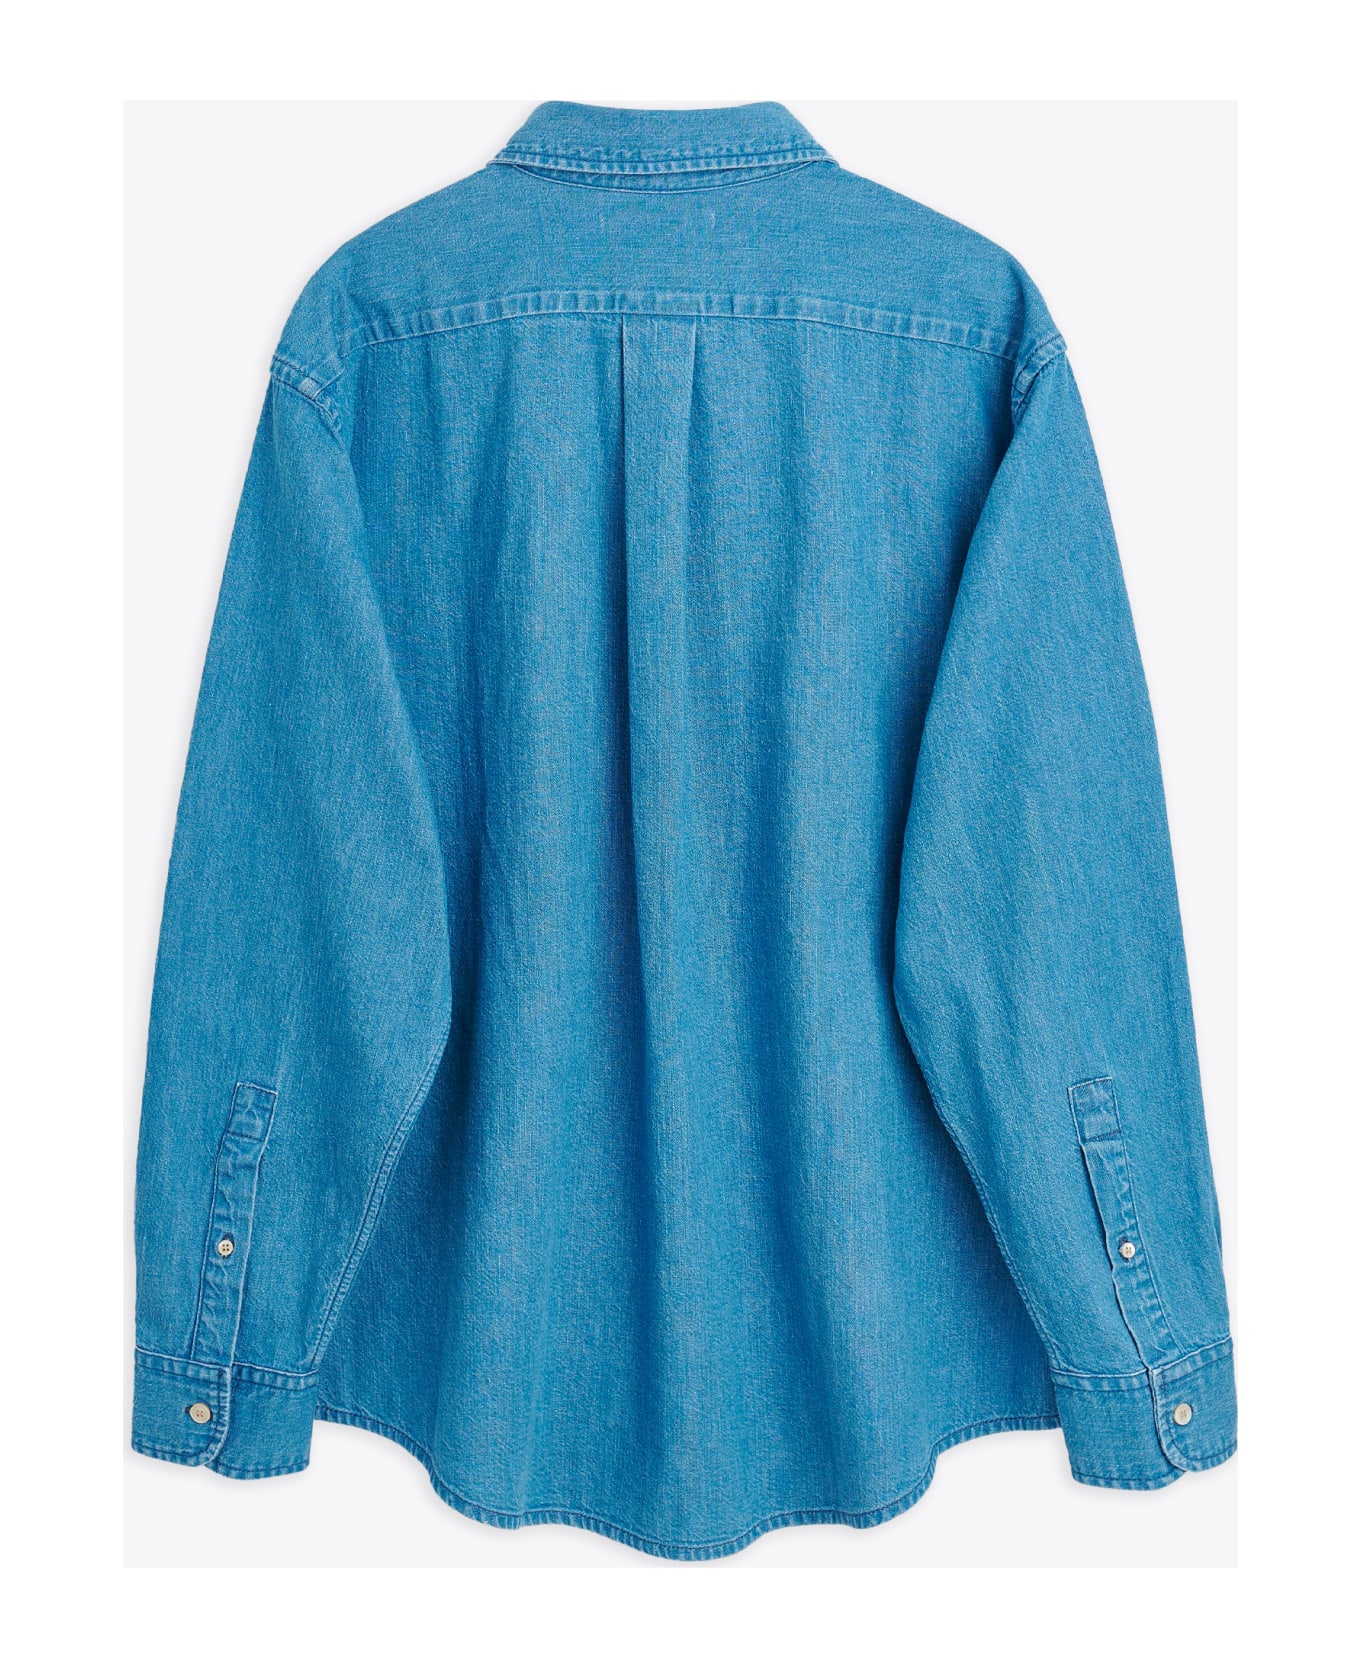 Sunflower #1189 Mid blue chambray denim shirt with long sleeves - Denim Button Down Shirt - Denim blu